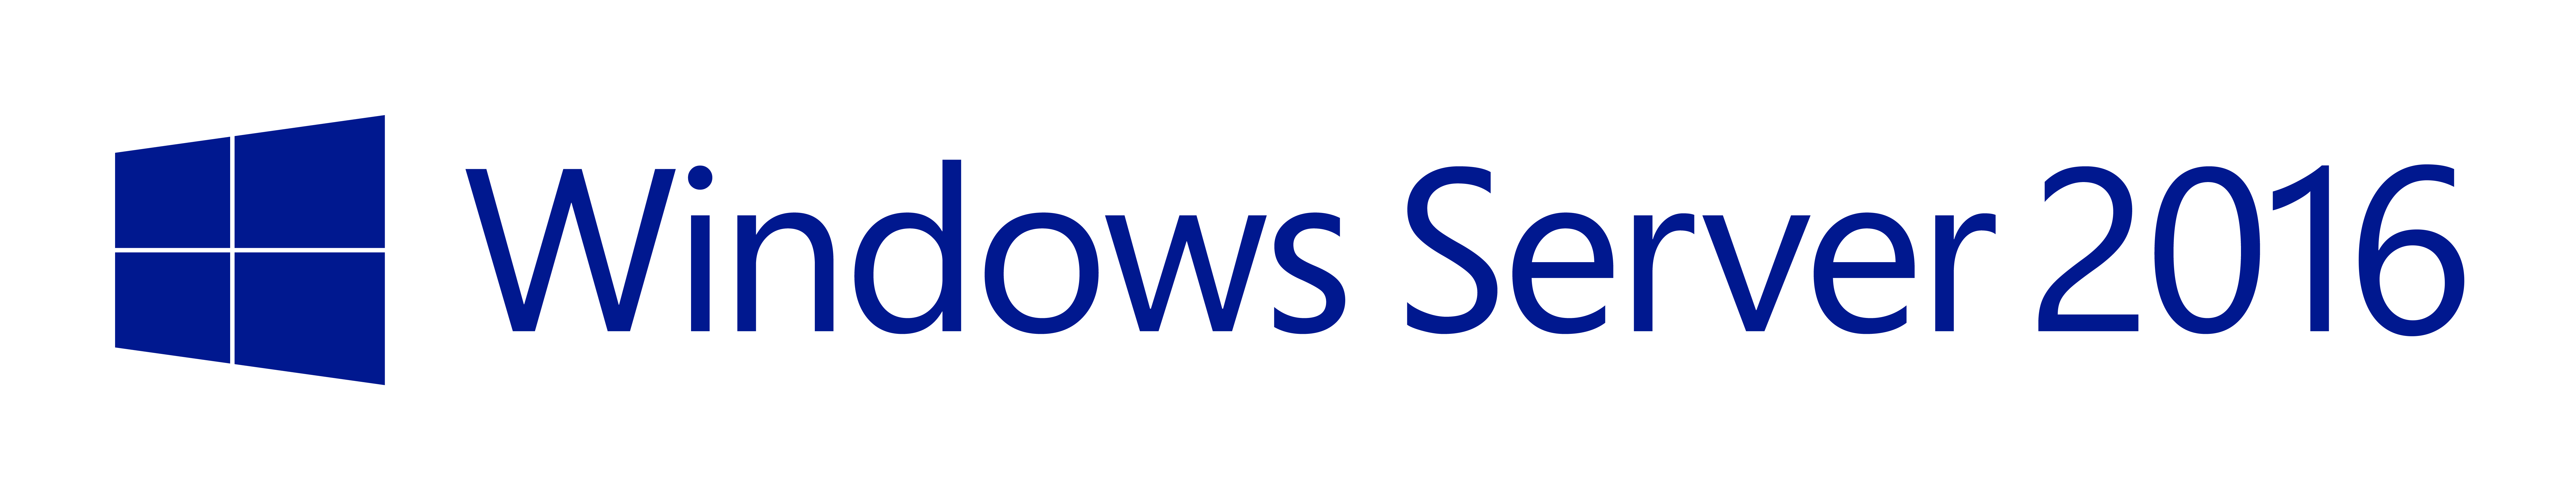 Windows 8 Server Logo - File:Windows-server-2016.png - Wikimedia Commons